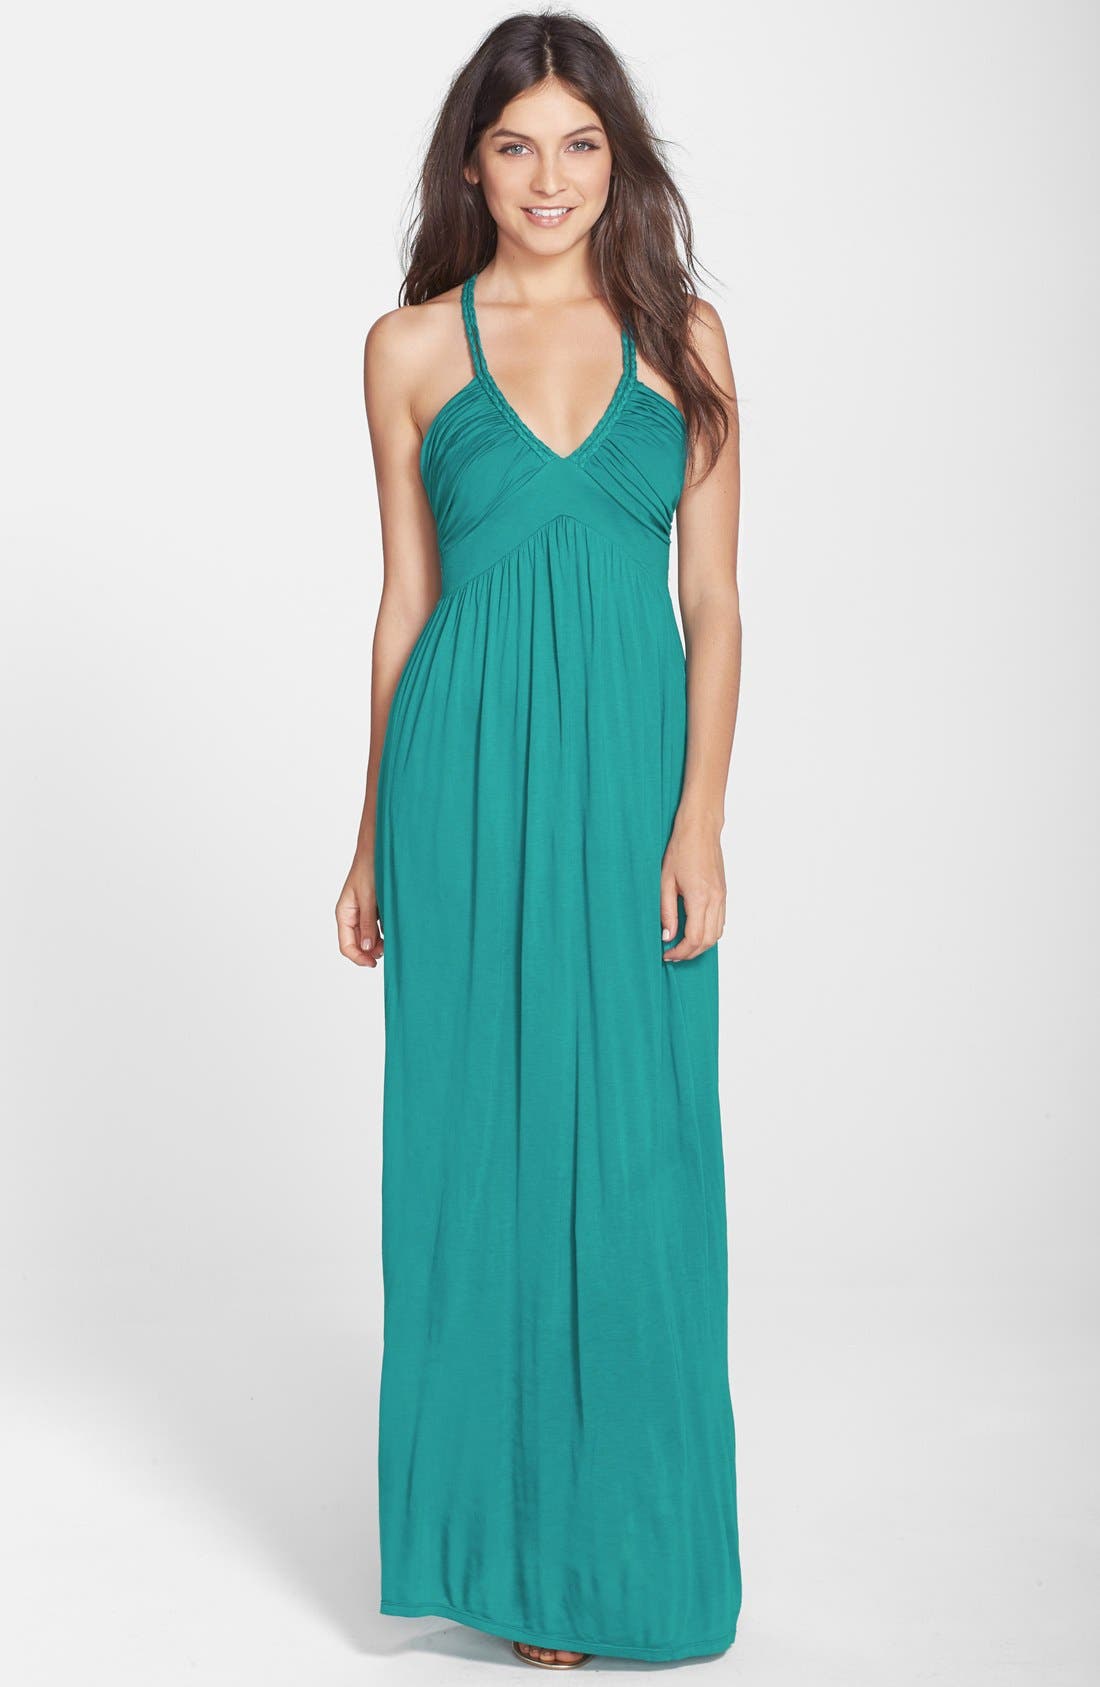 nordstrom turquoise dress